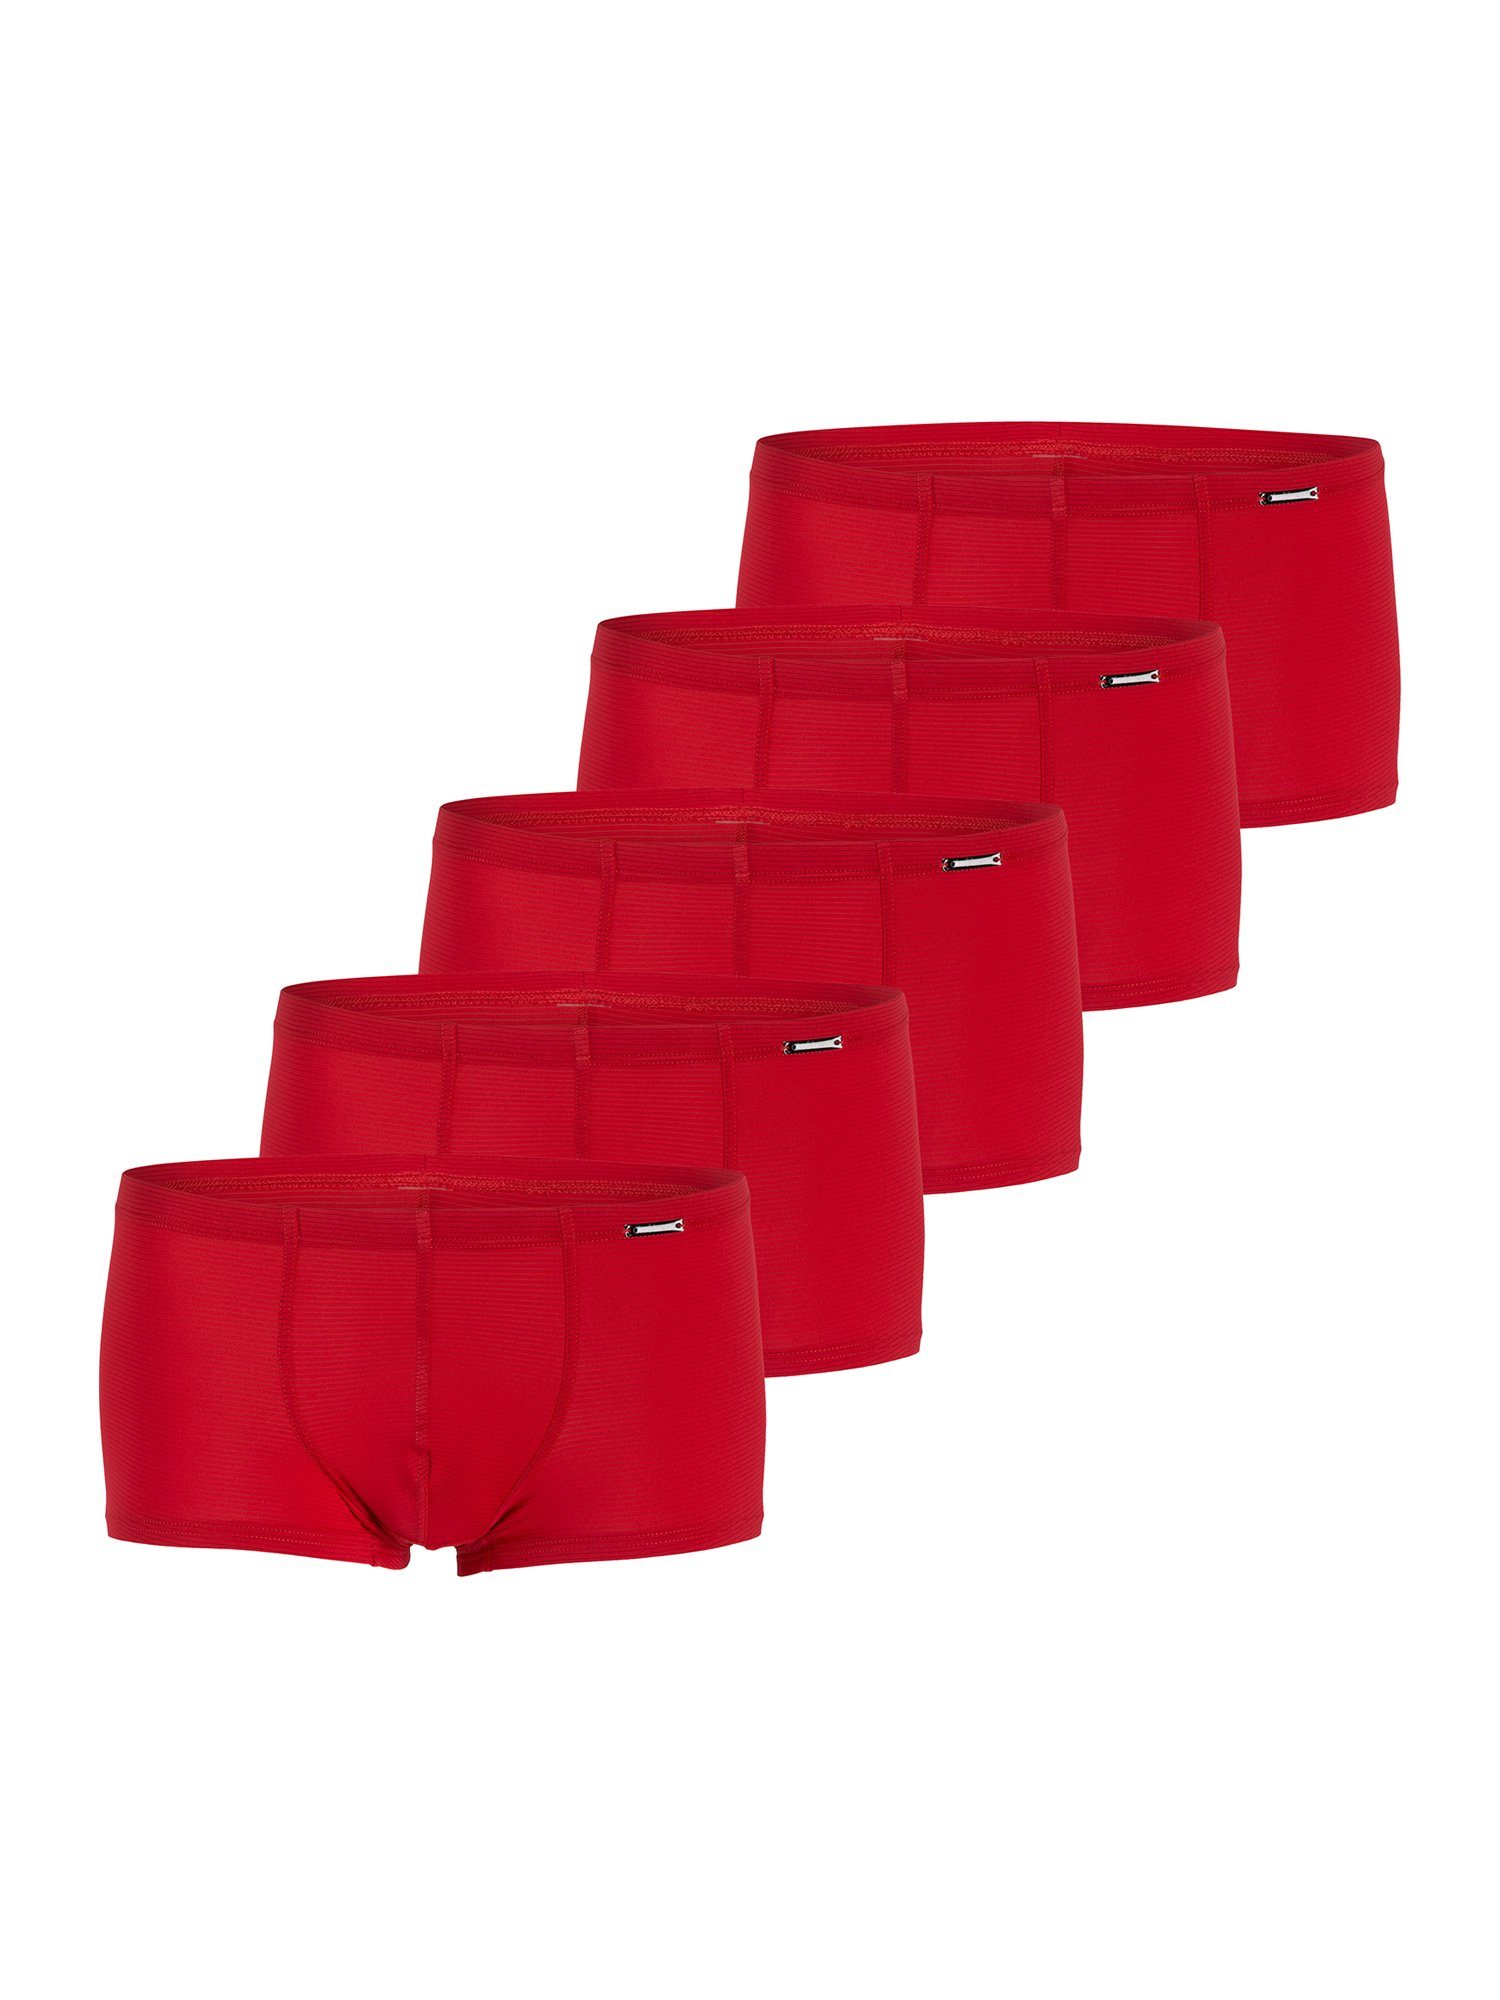 Olaf Benz Retro Pants RED1201 Minipants (5-St) Retro-Pants unterhose männer rot